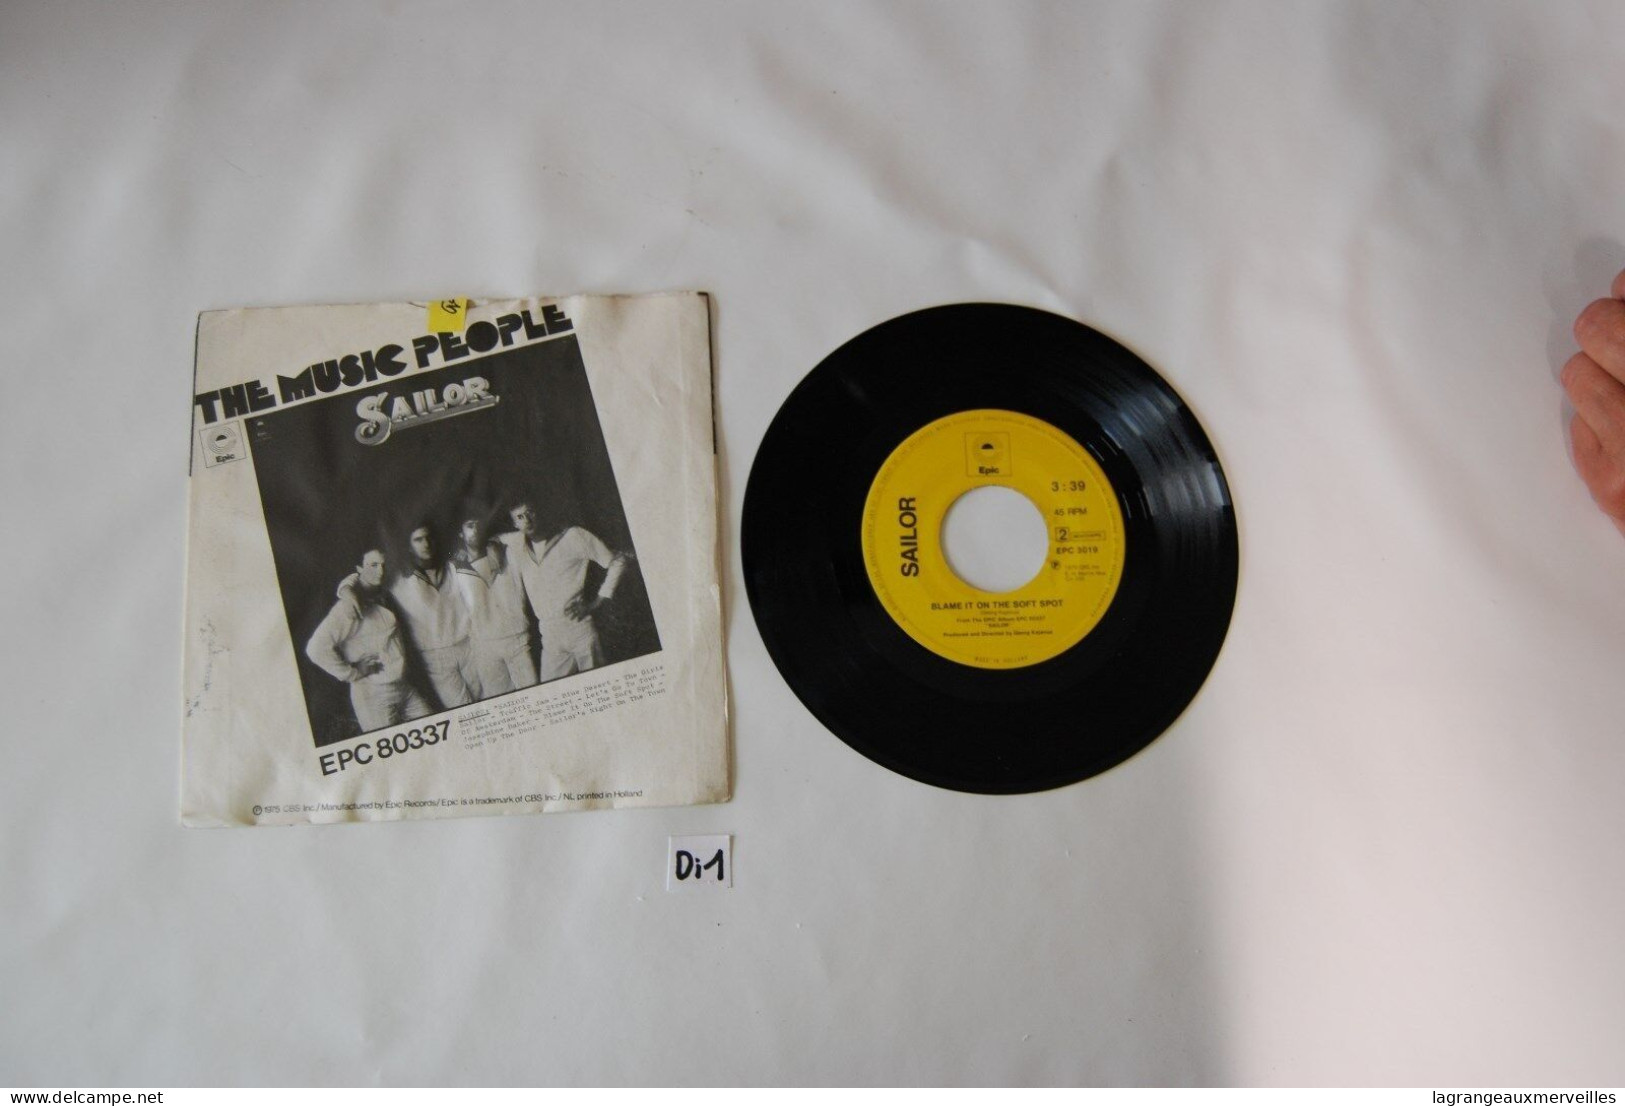 Di1- Vinyl 45 T - Sailor - The Music People Epc 80337 - Country En Folk